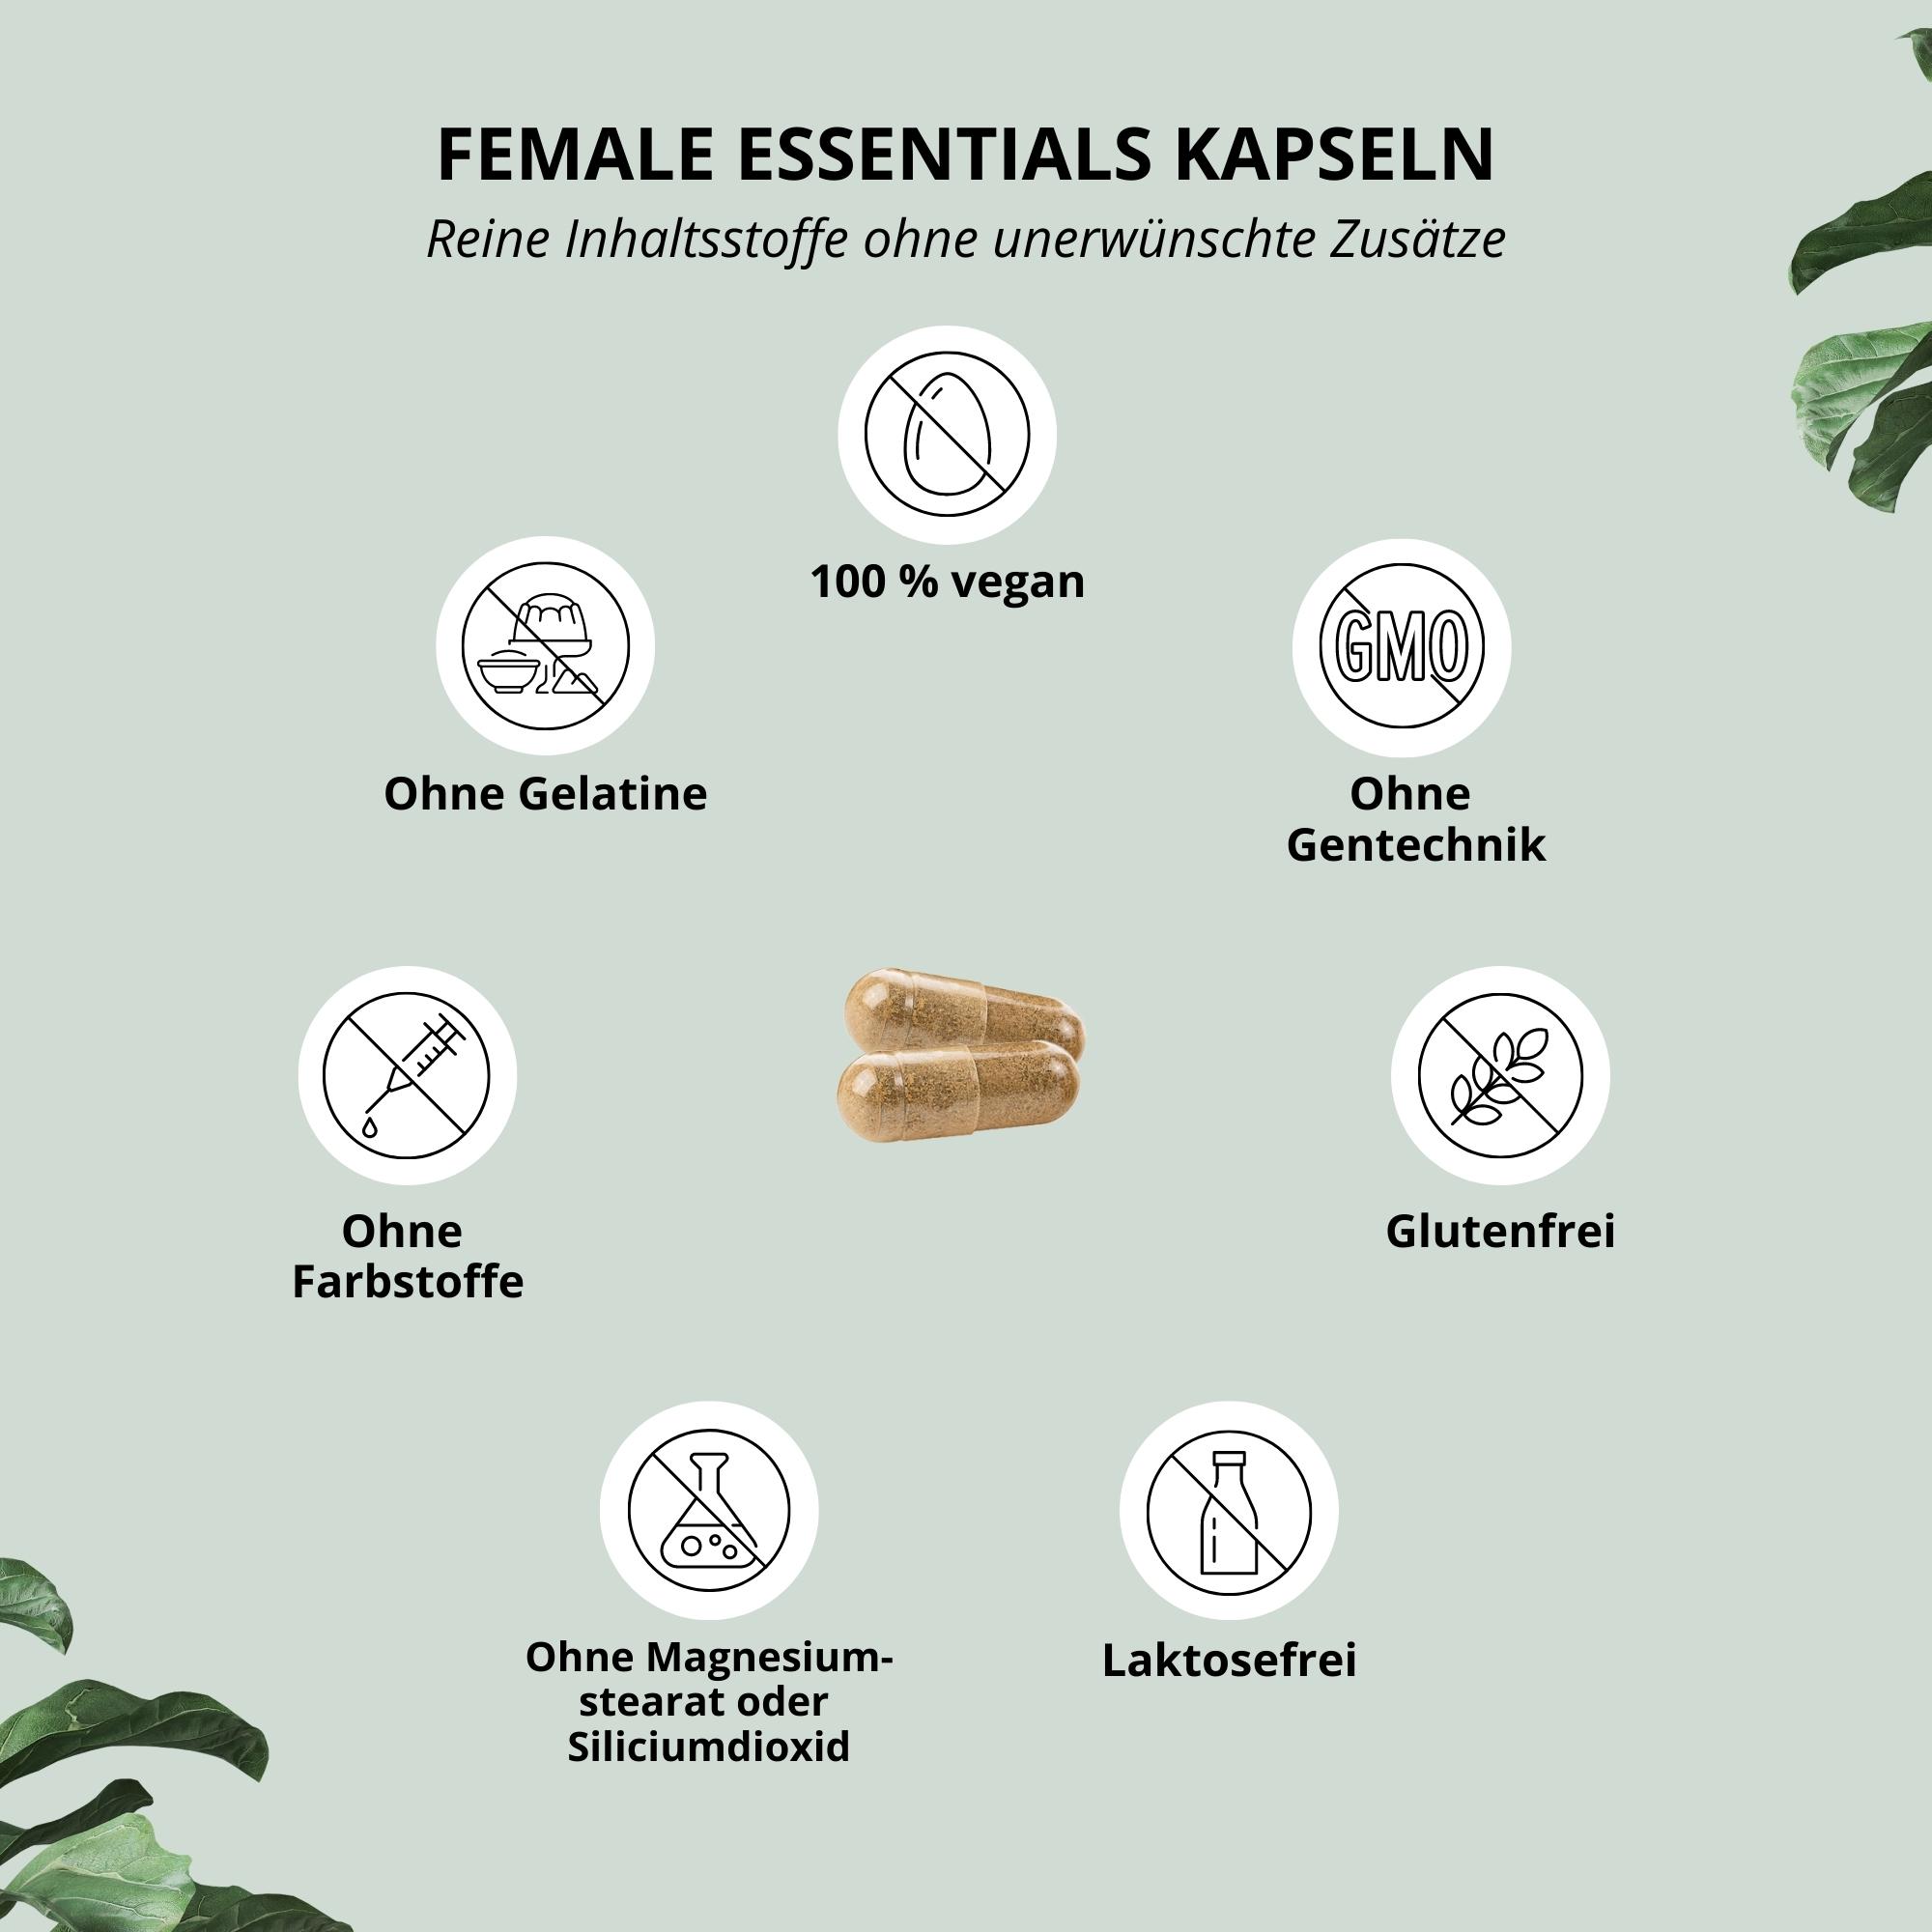 Female Essentials Kapseln